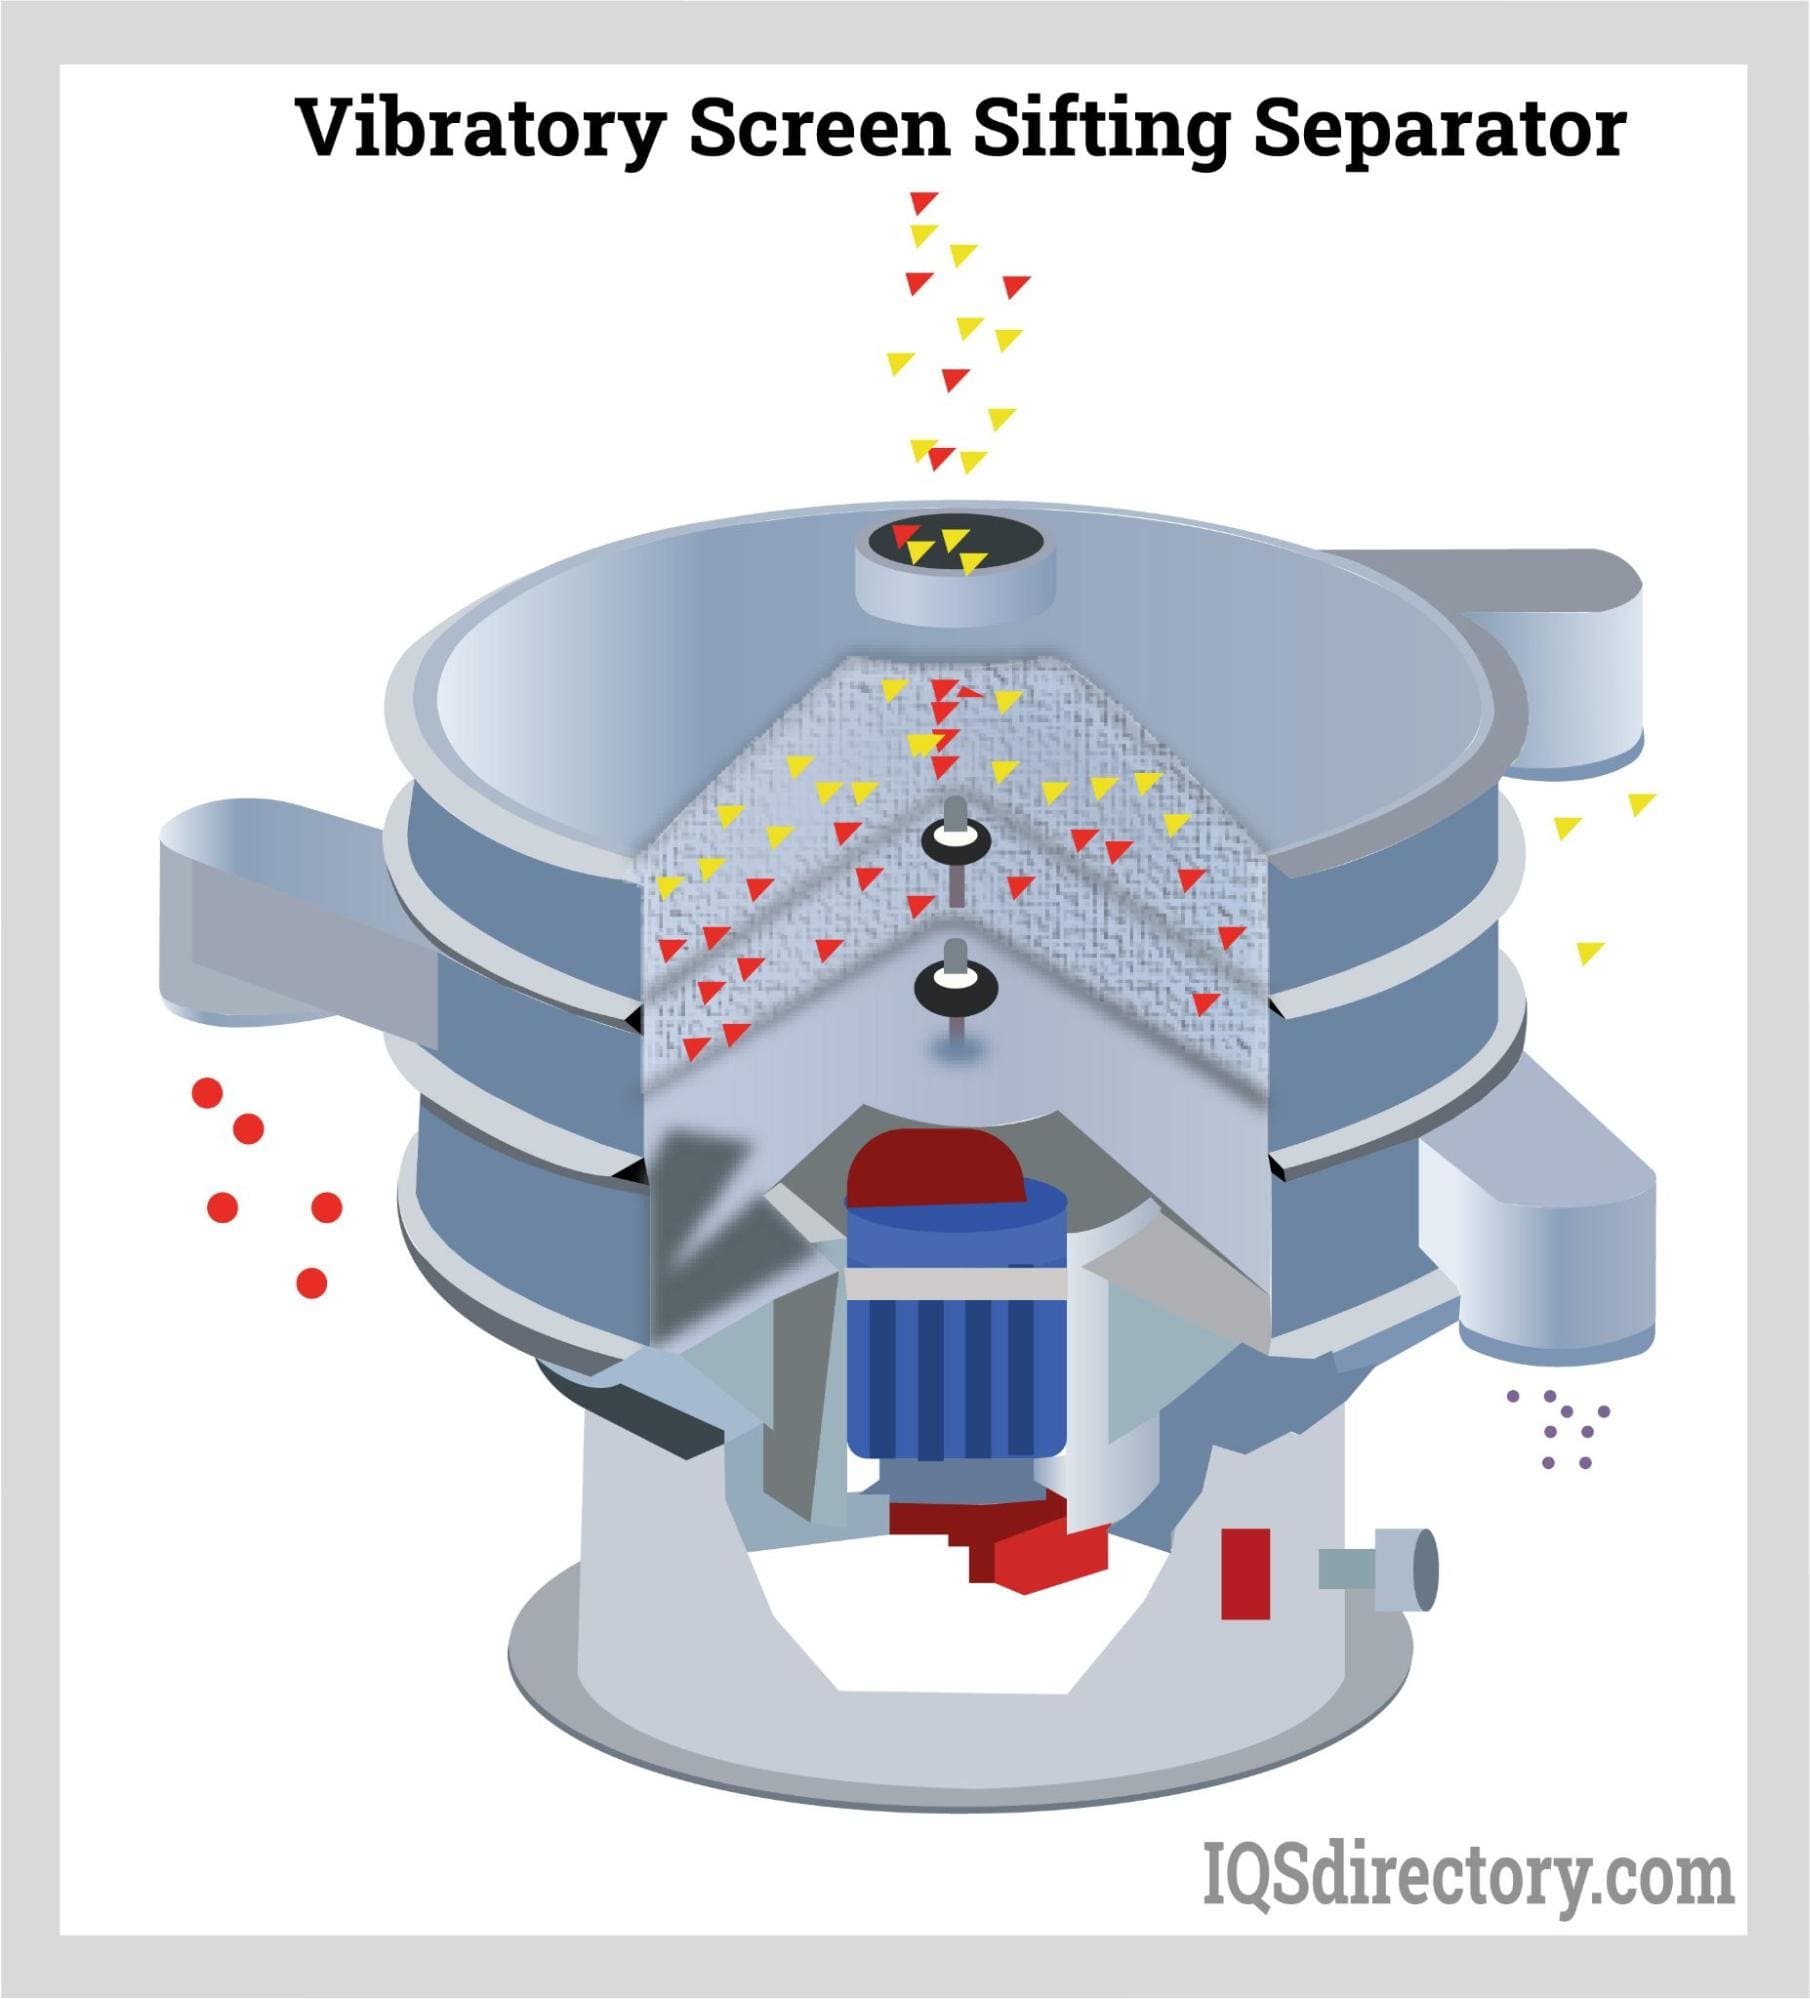 Vibratory Screen Sifting Separator